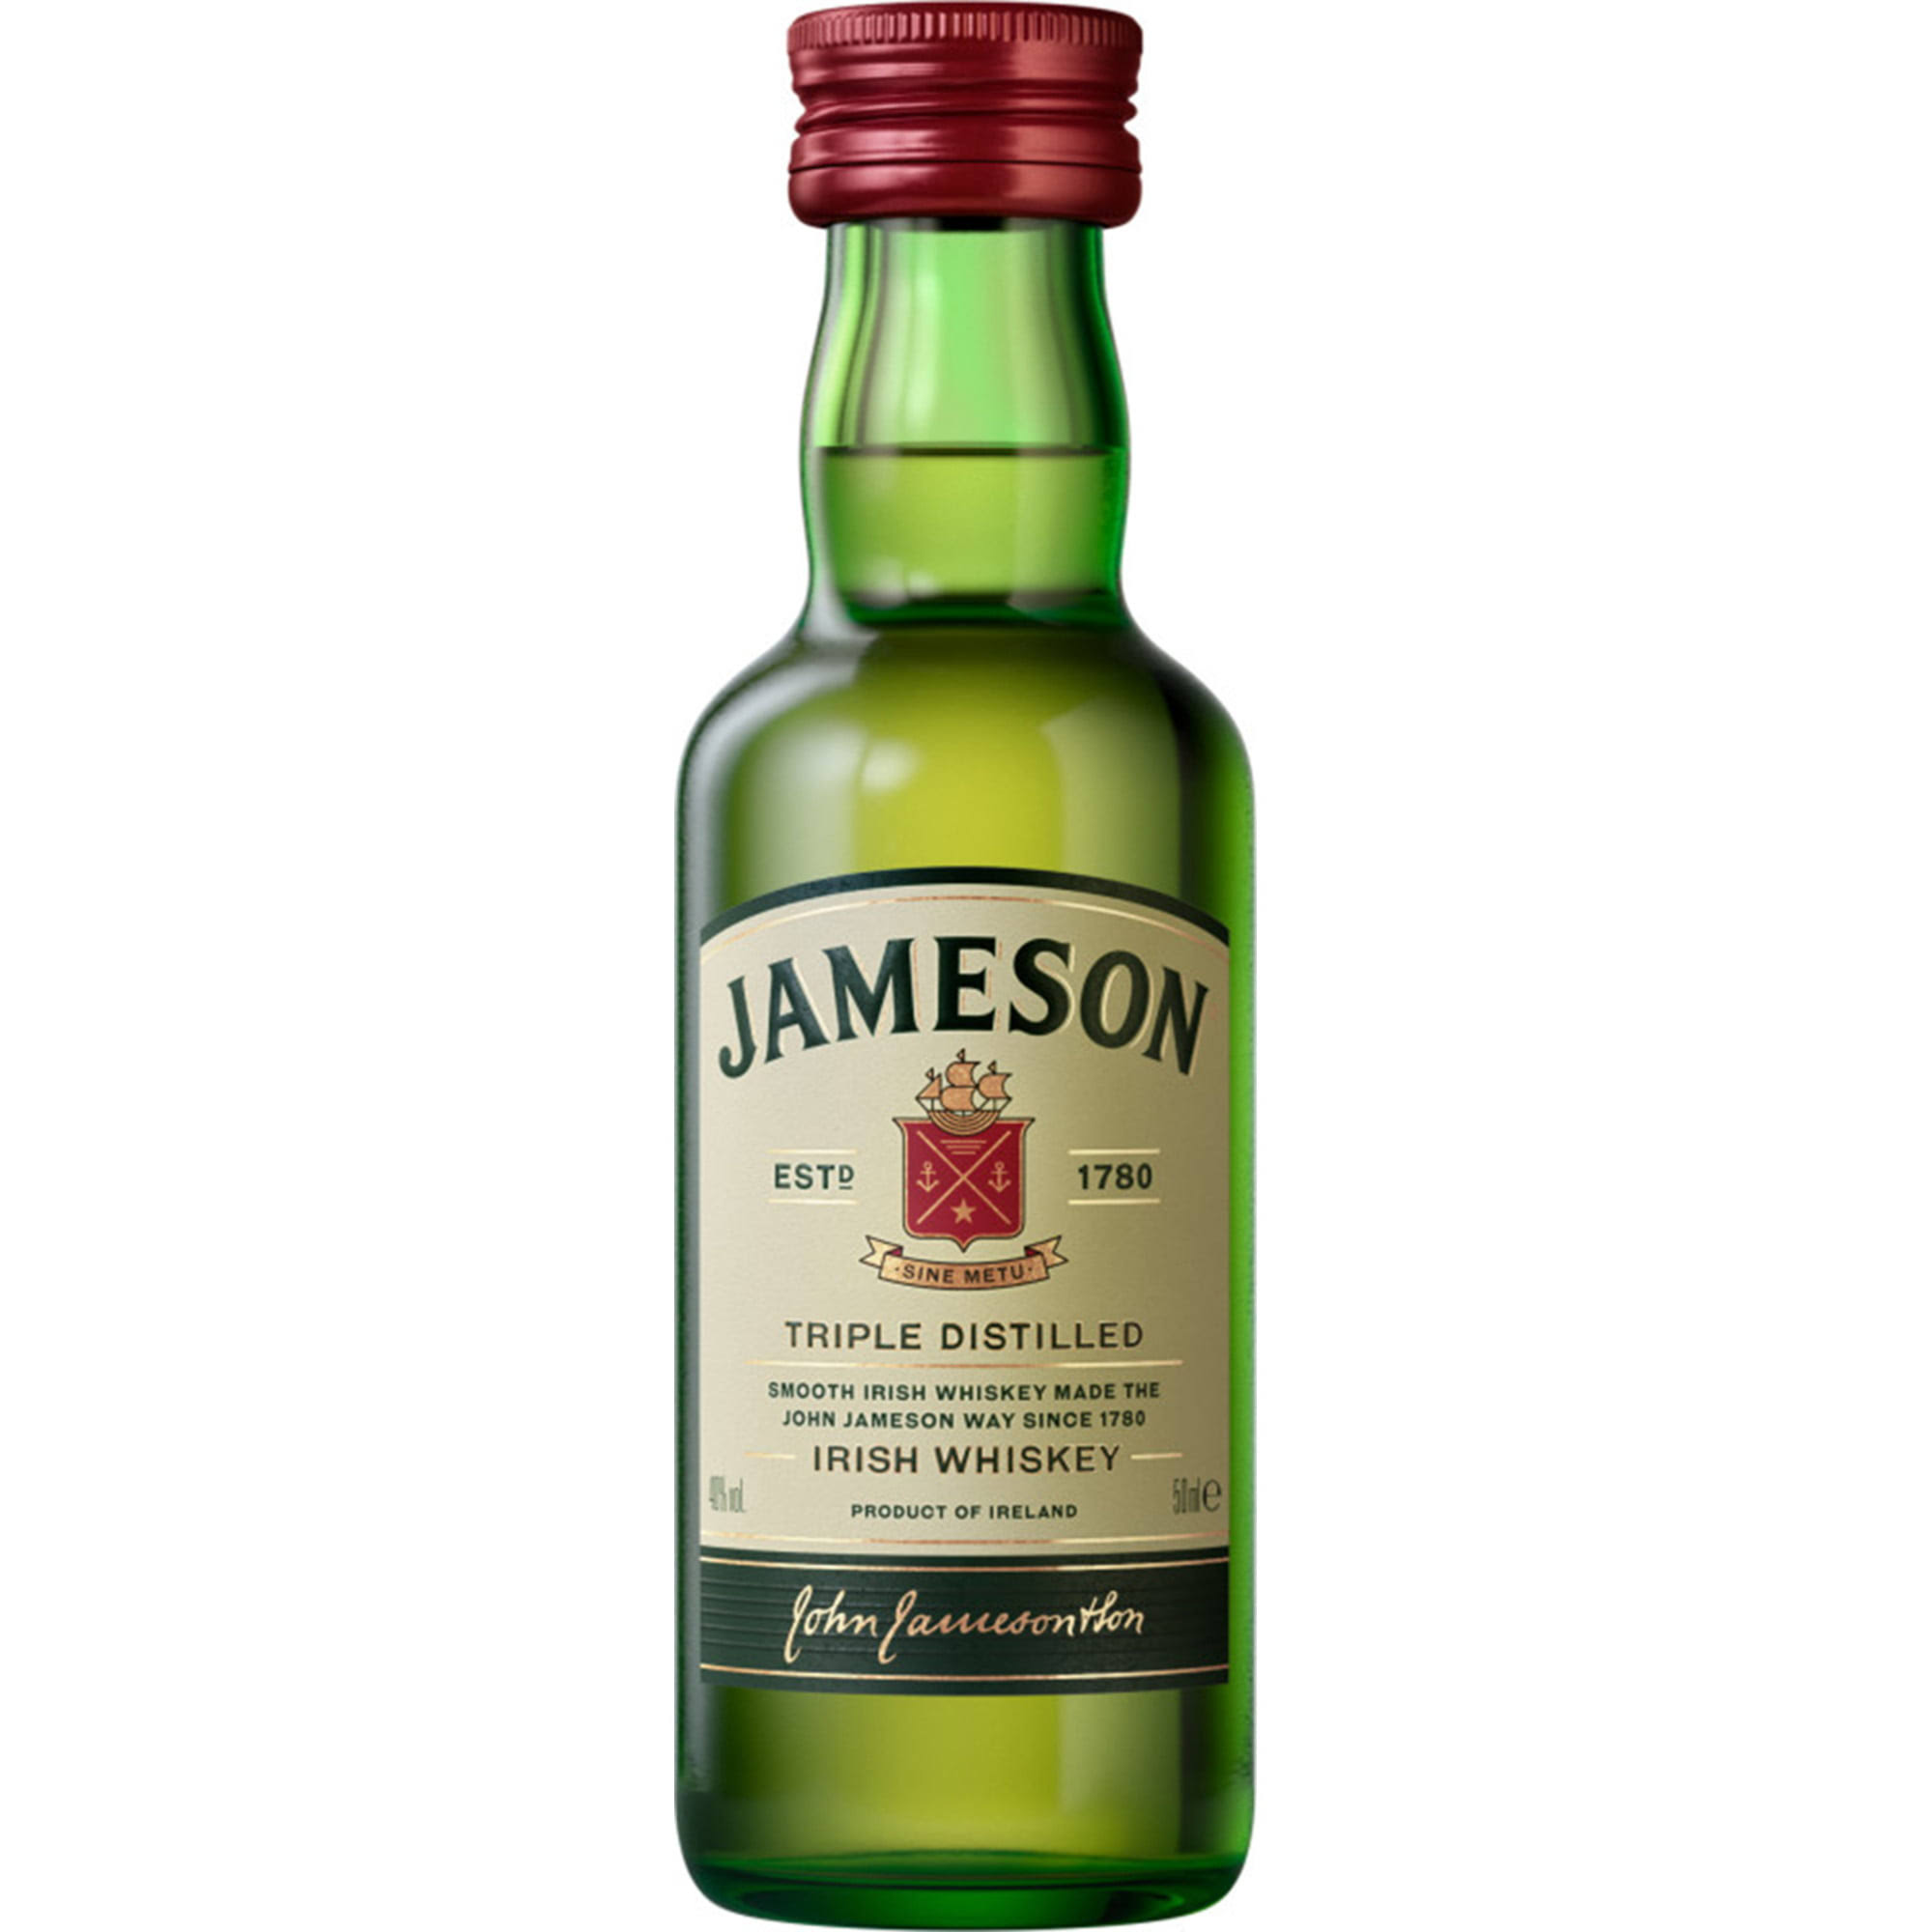 Jameson Irish Whiskey 50ml Bottle